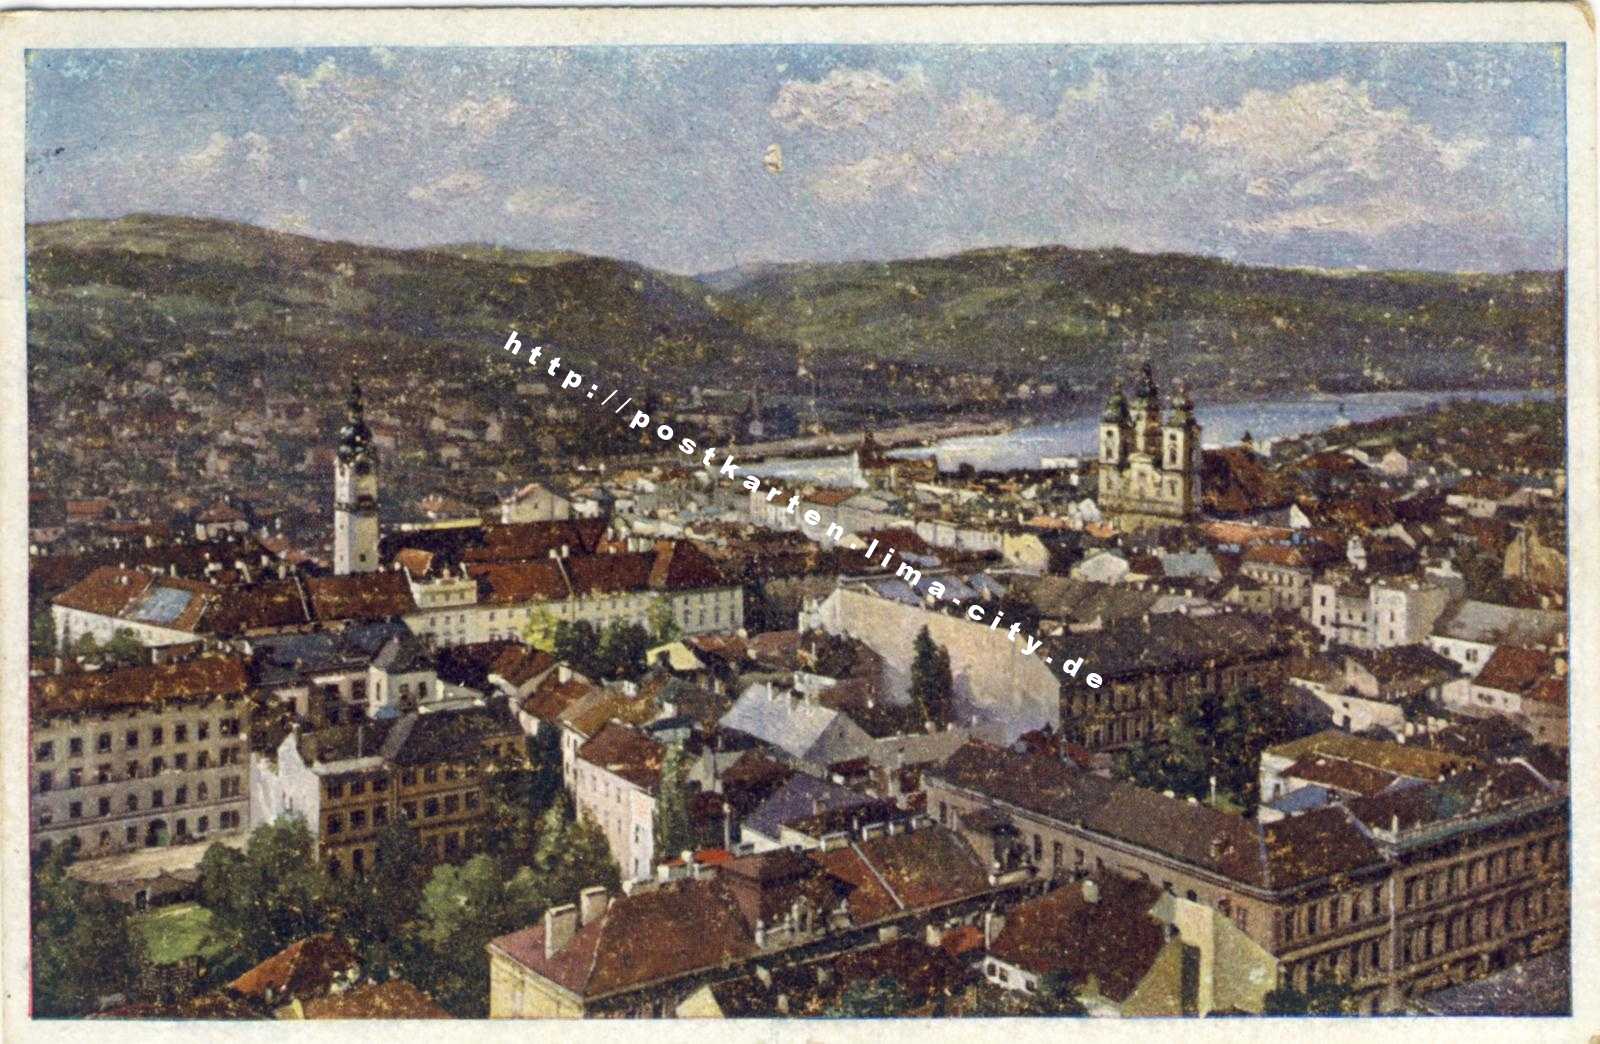 Linz 1917